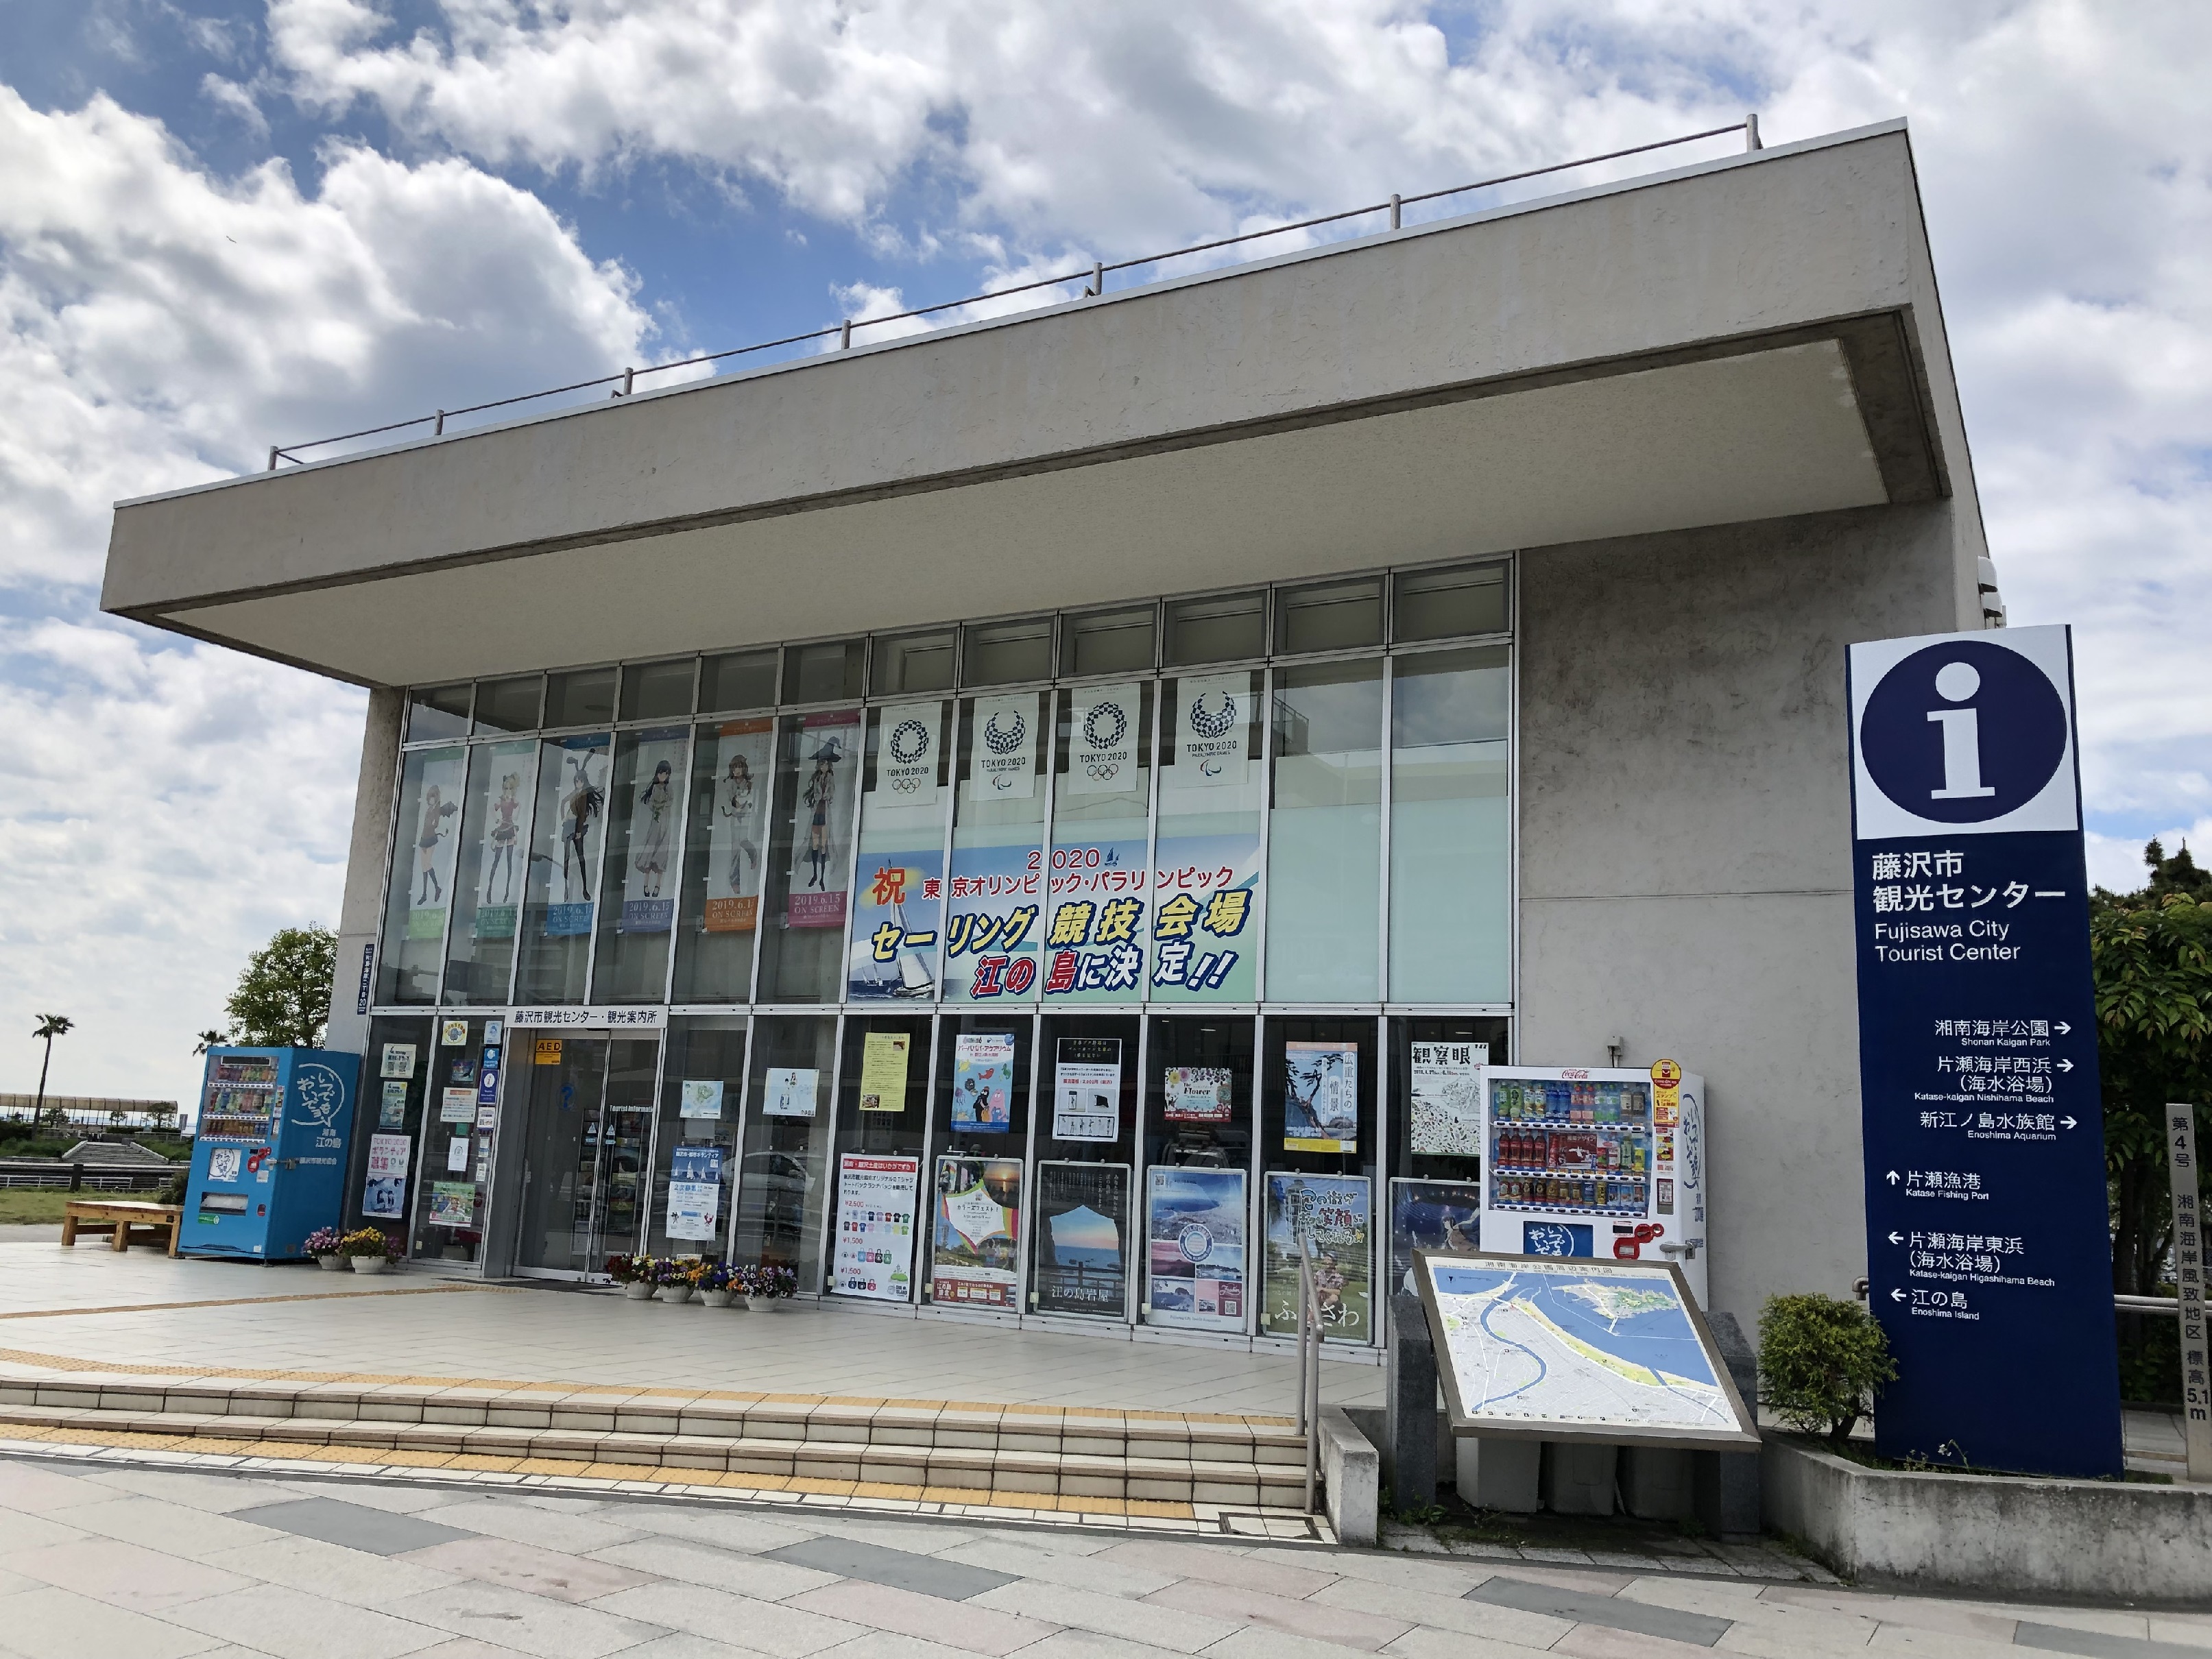 Centro turístico de Fujisawa